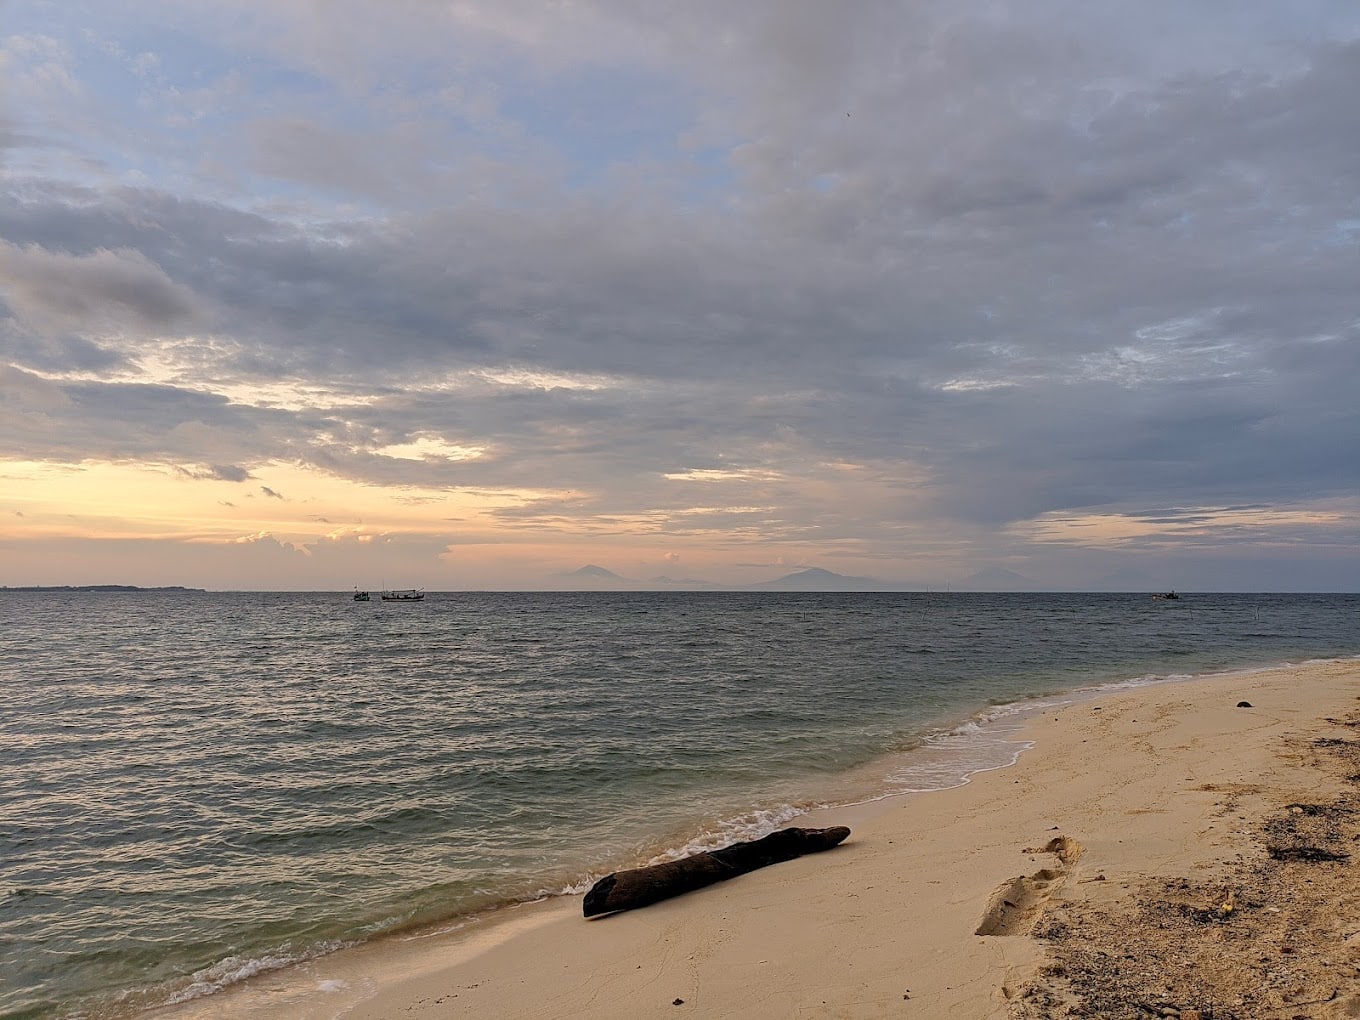 Pantai Pulau Panjang